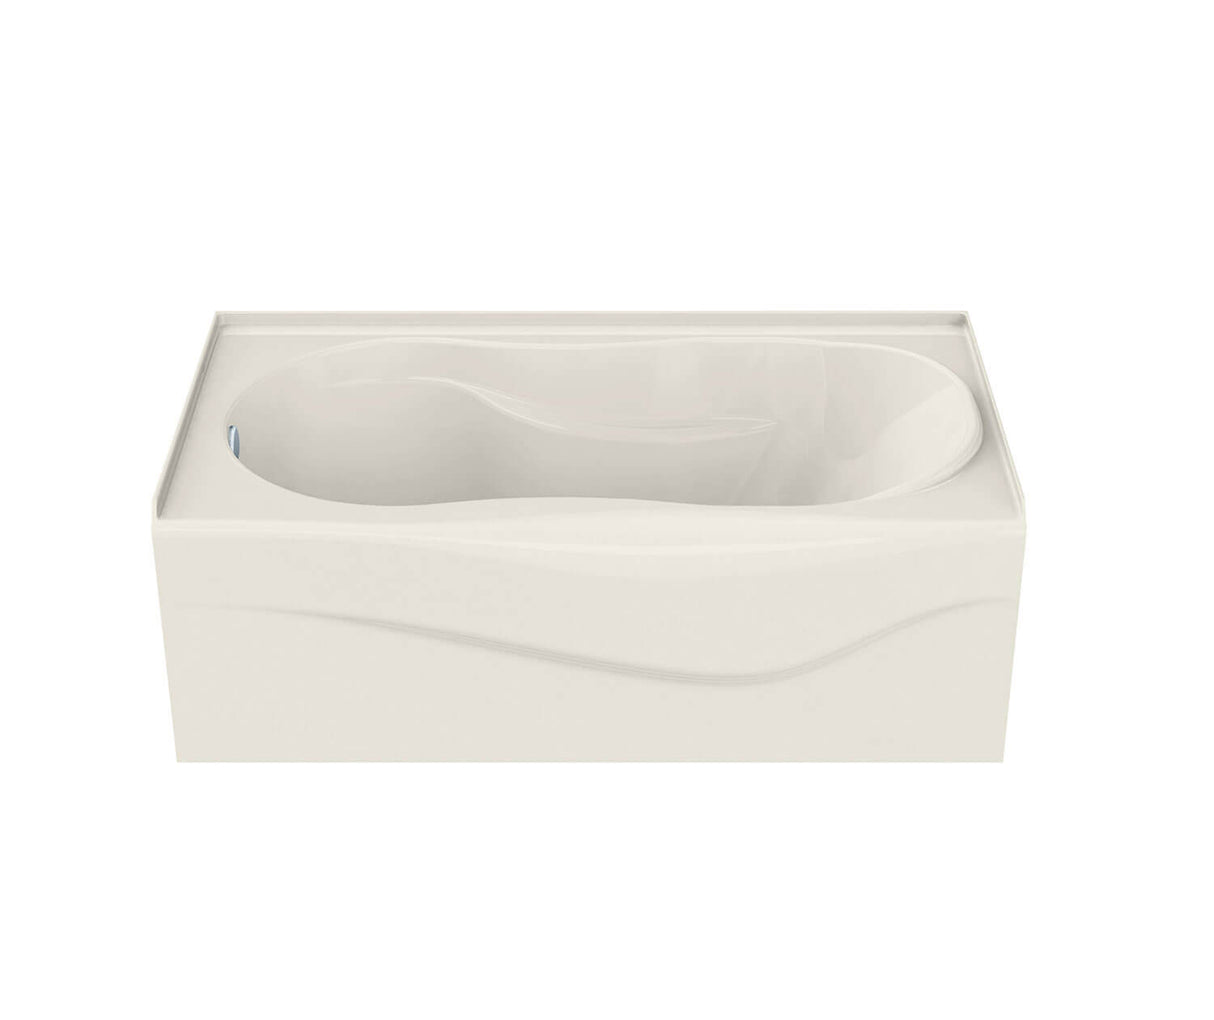 MAAX 105726-L-000-007 Murmur 6032 A Acrylic Alcove Left-Hand Drain Bathtub in Biscuit